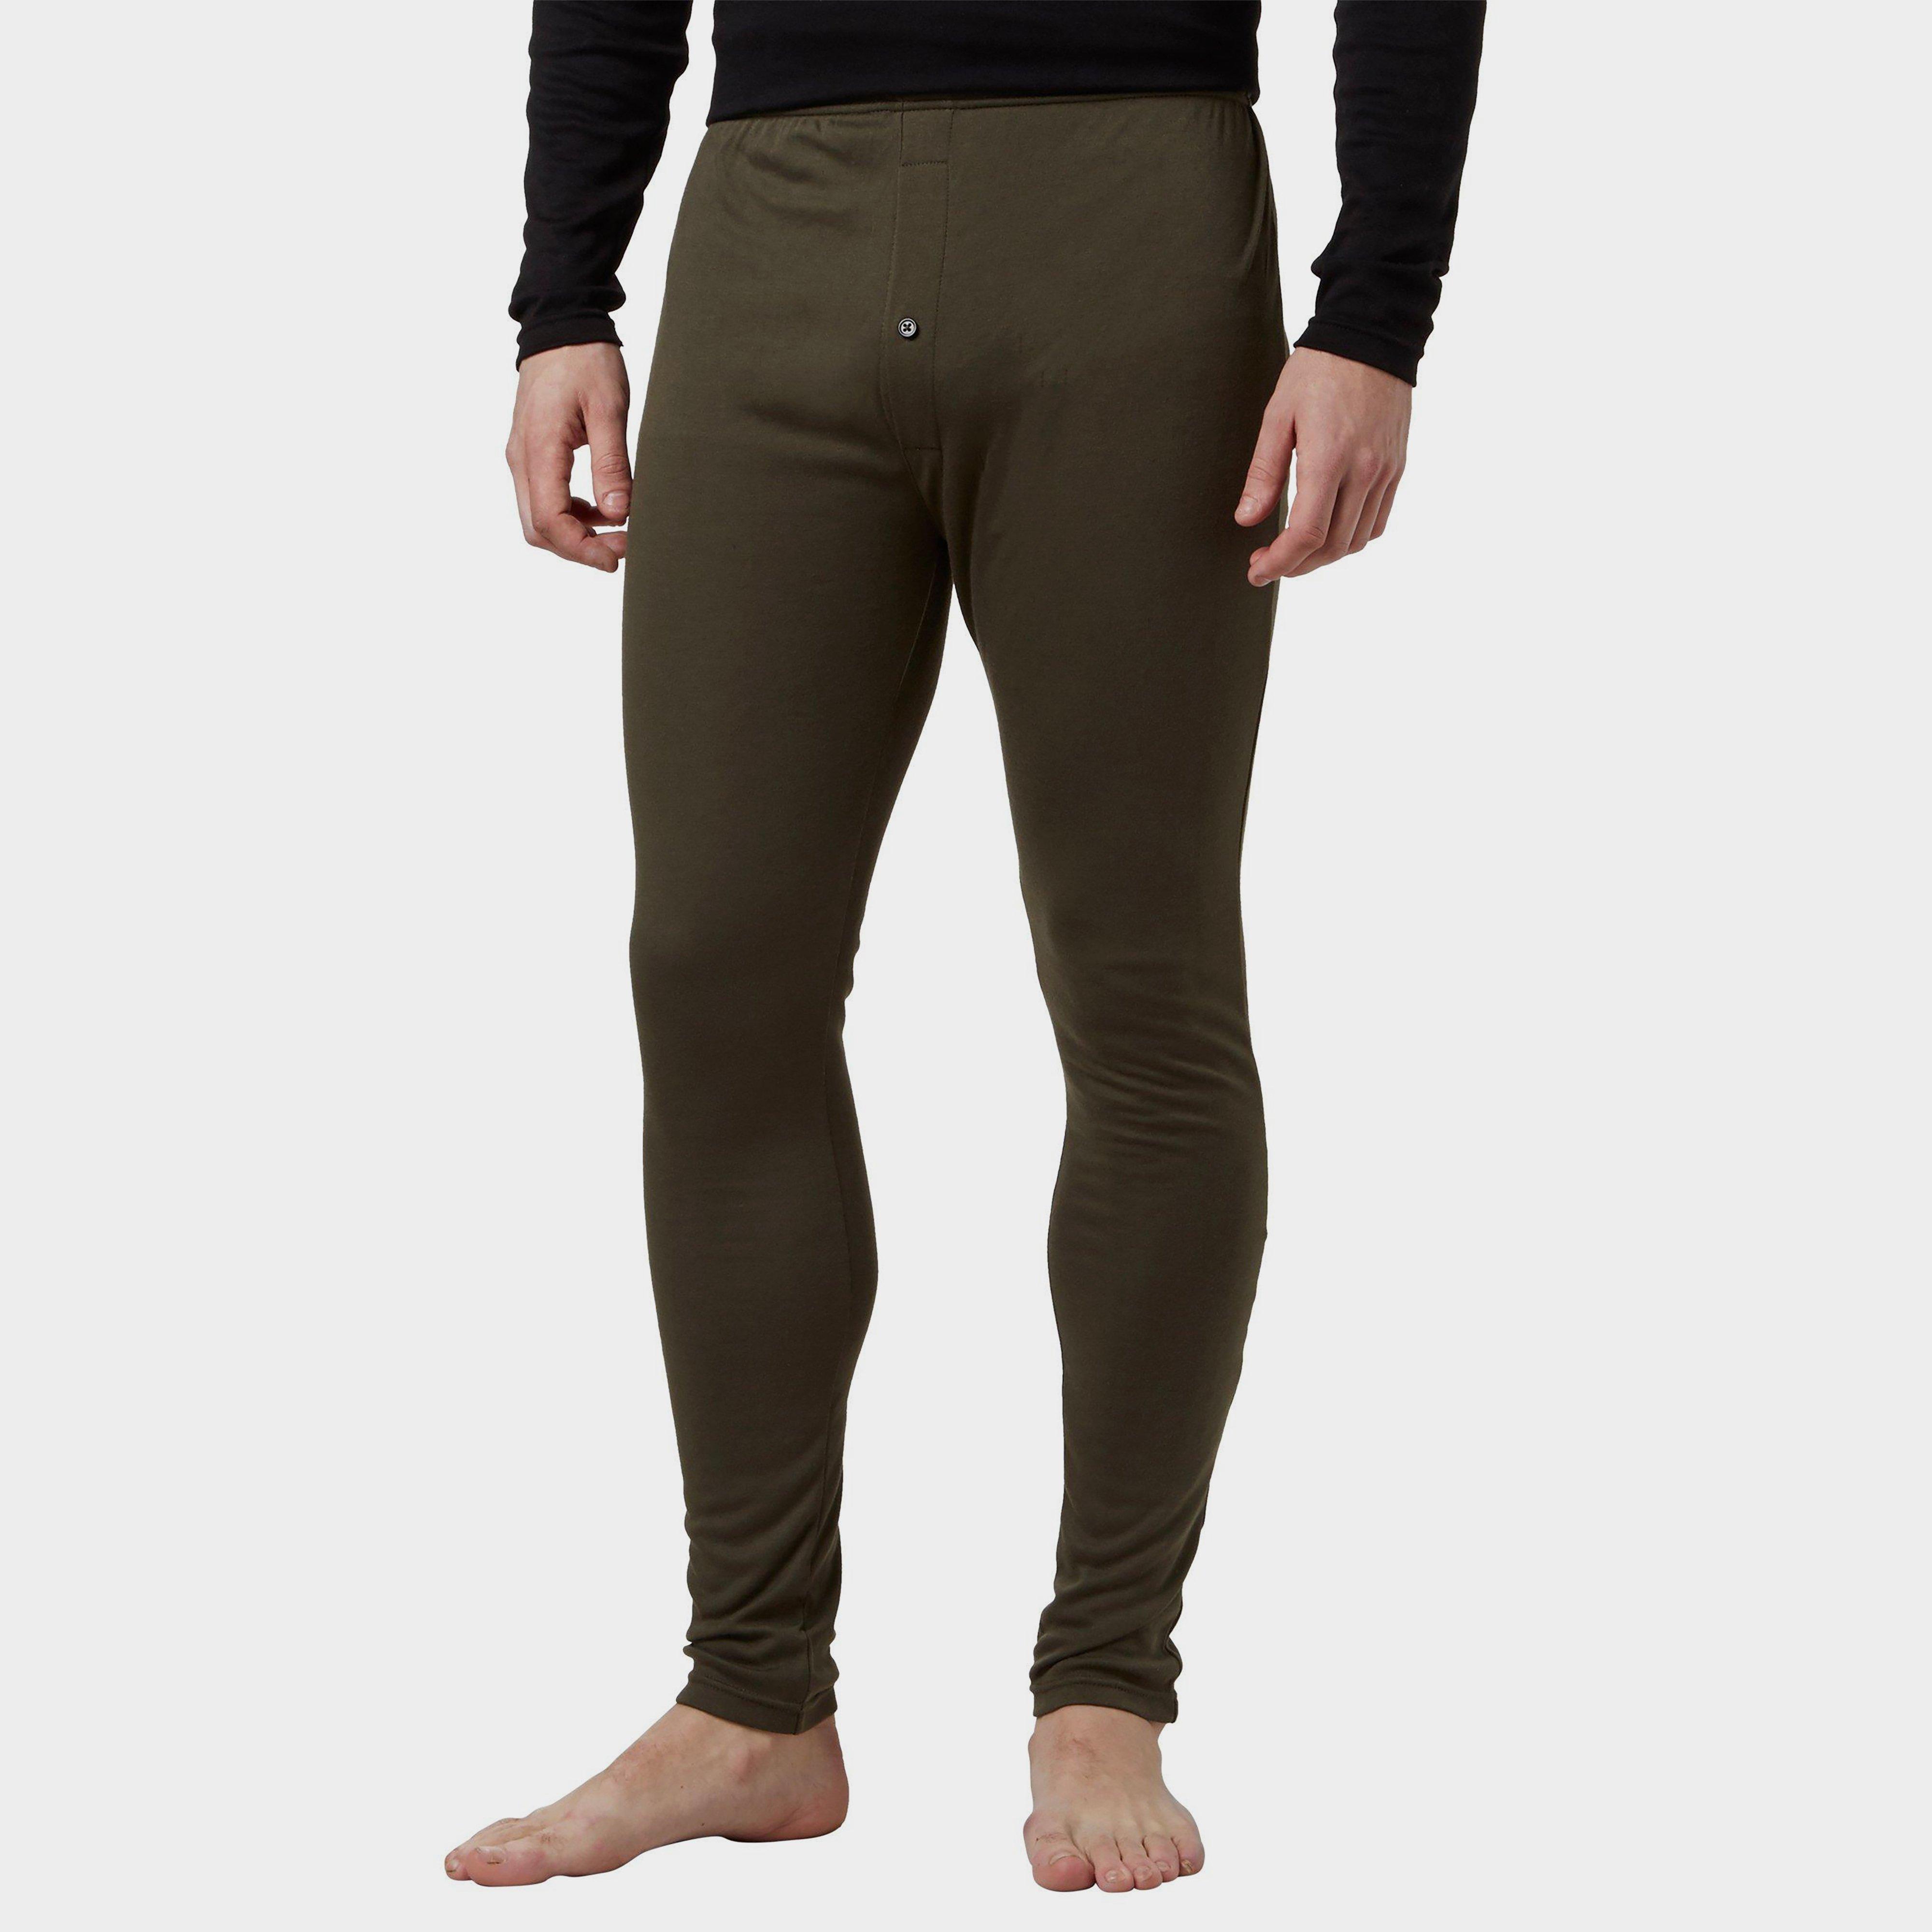 Image of Peter Storm Men's Thermal Baselayer Pants - Khaki/Khk, Khaki/KHK